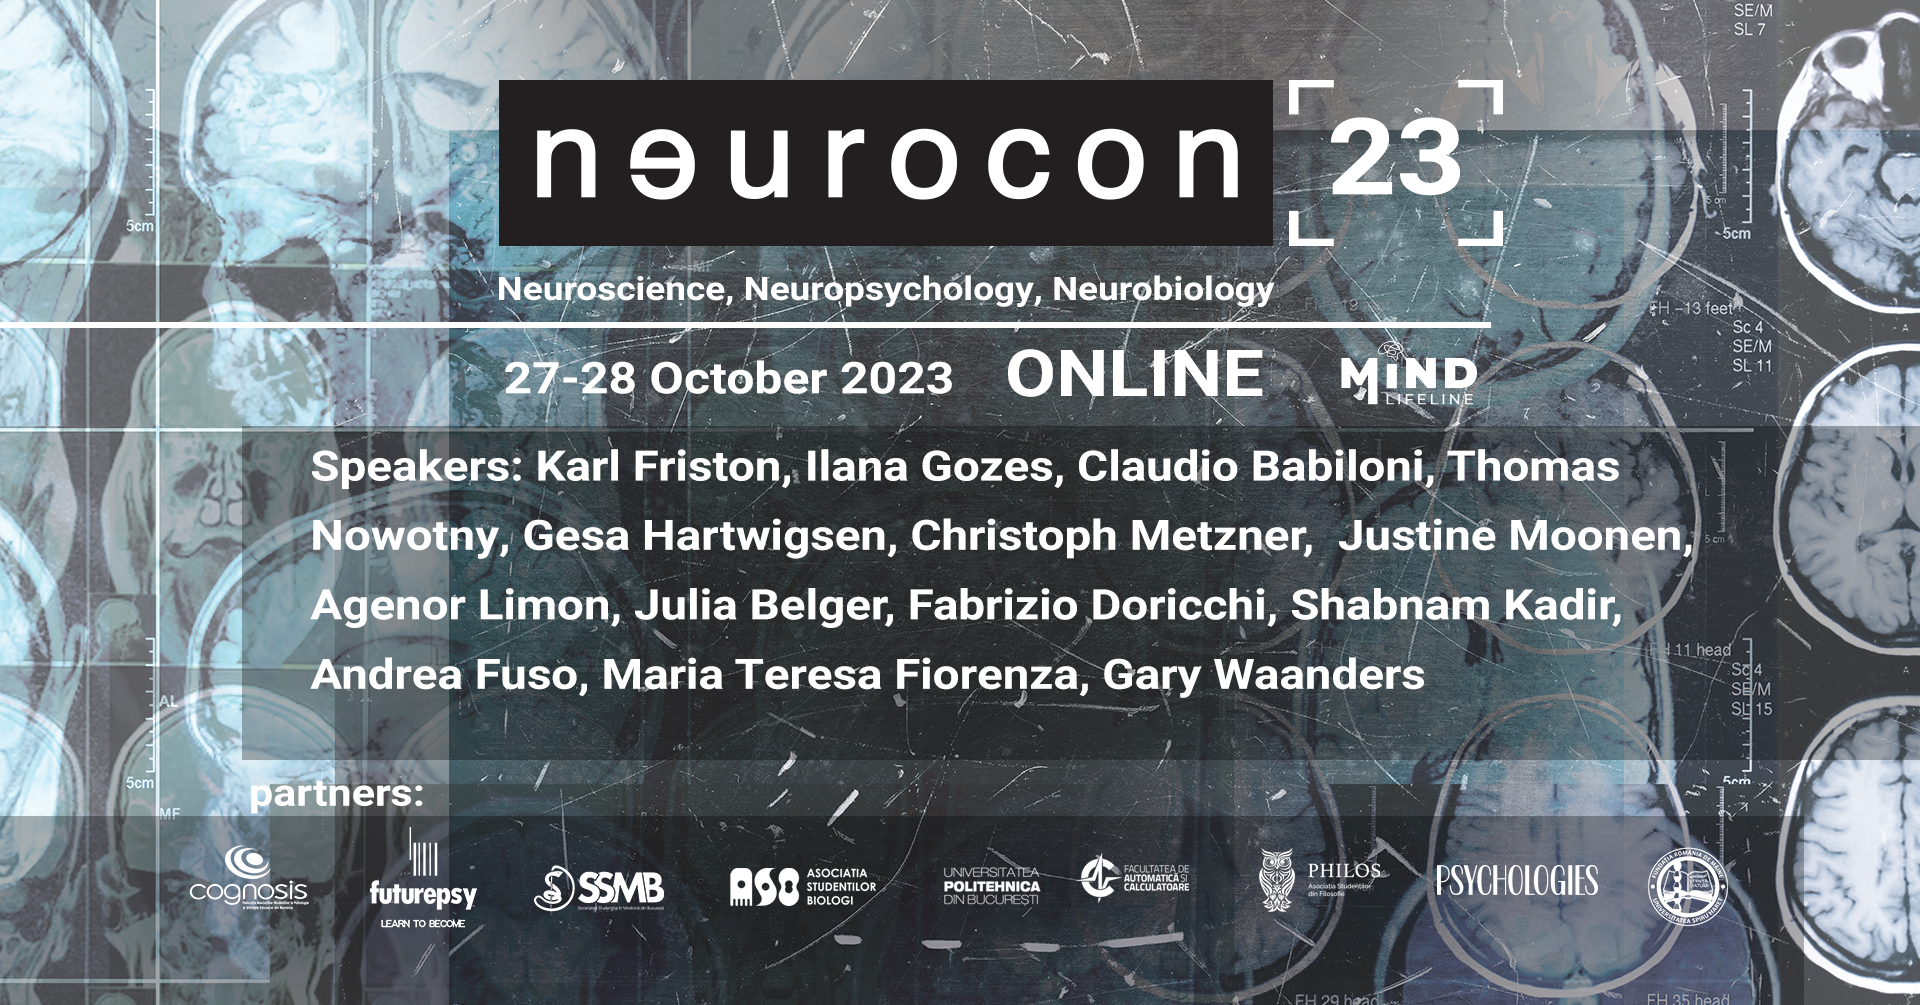 Conferința Neurocon 23 are loc între 27-28 octombrie